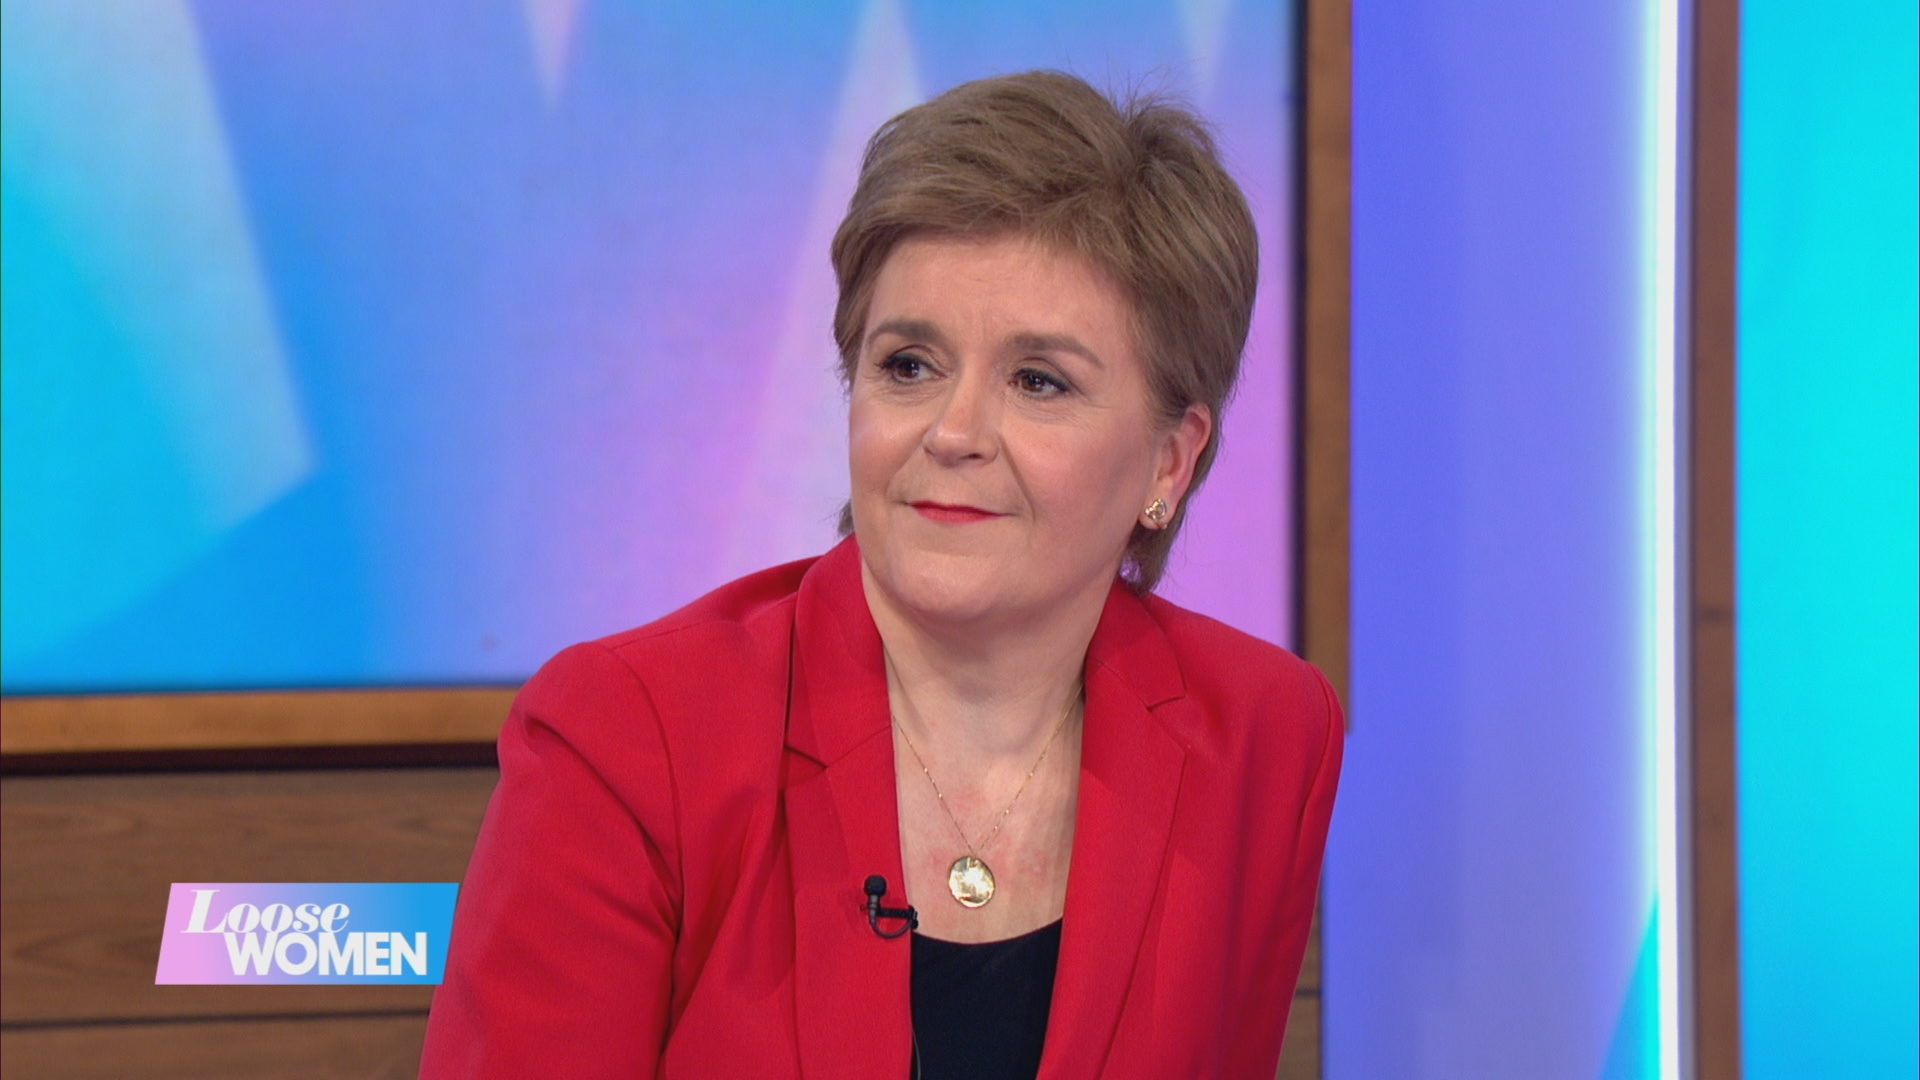 Nicola Sturgeon said she had no more stamina to continue as Scotland's First Minister.